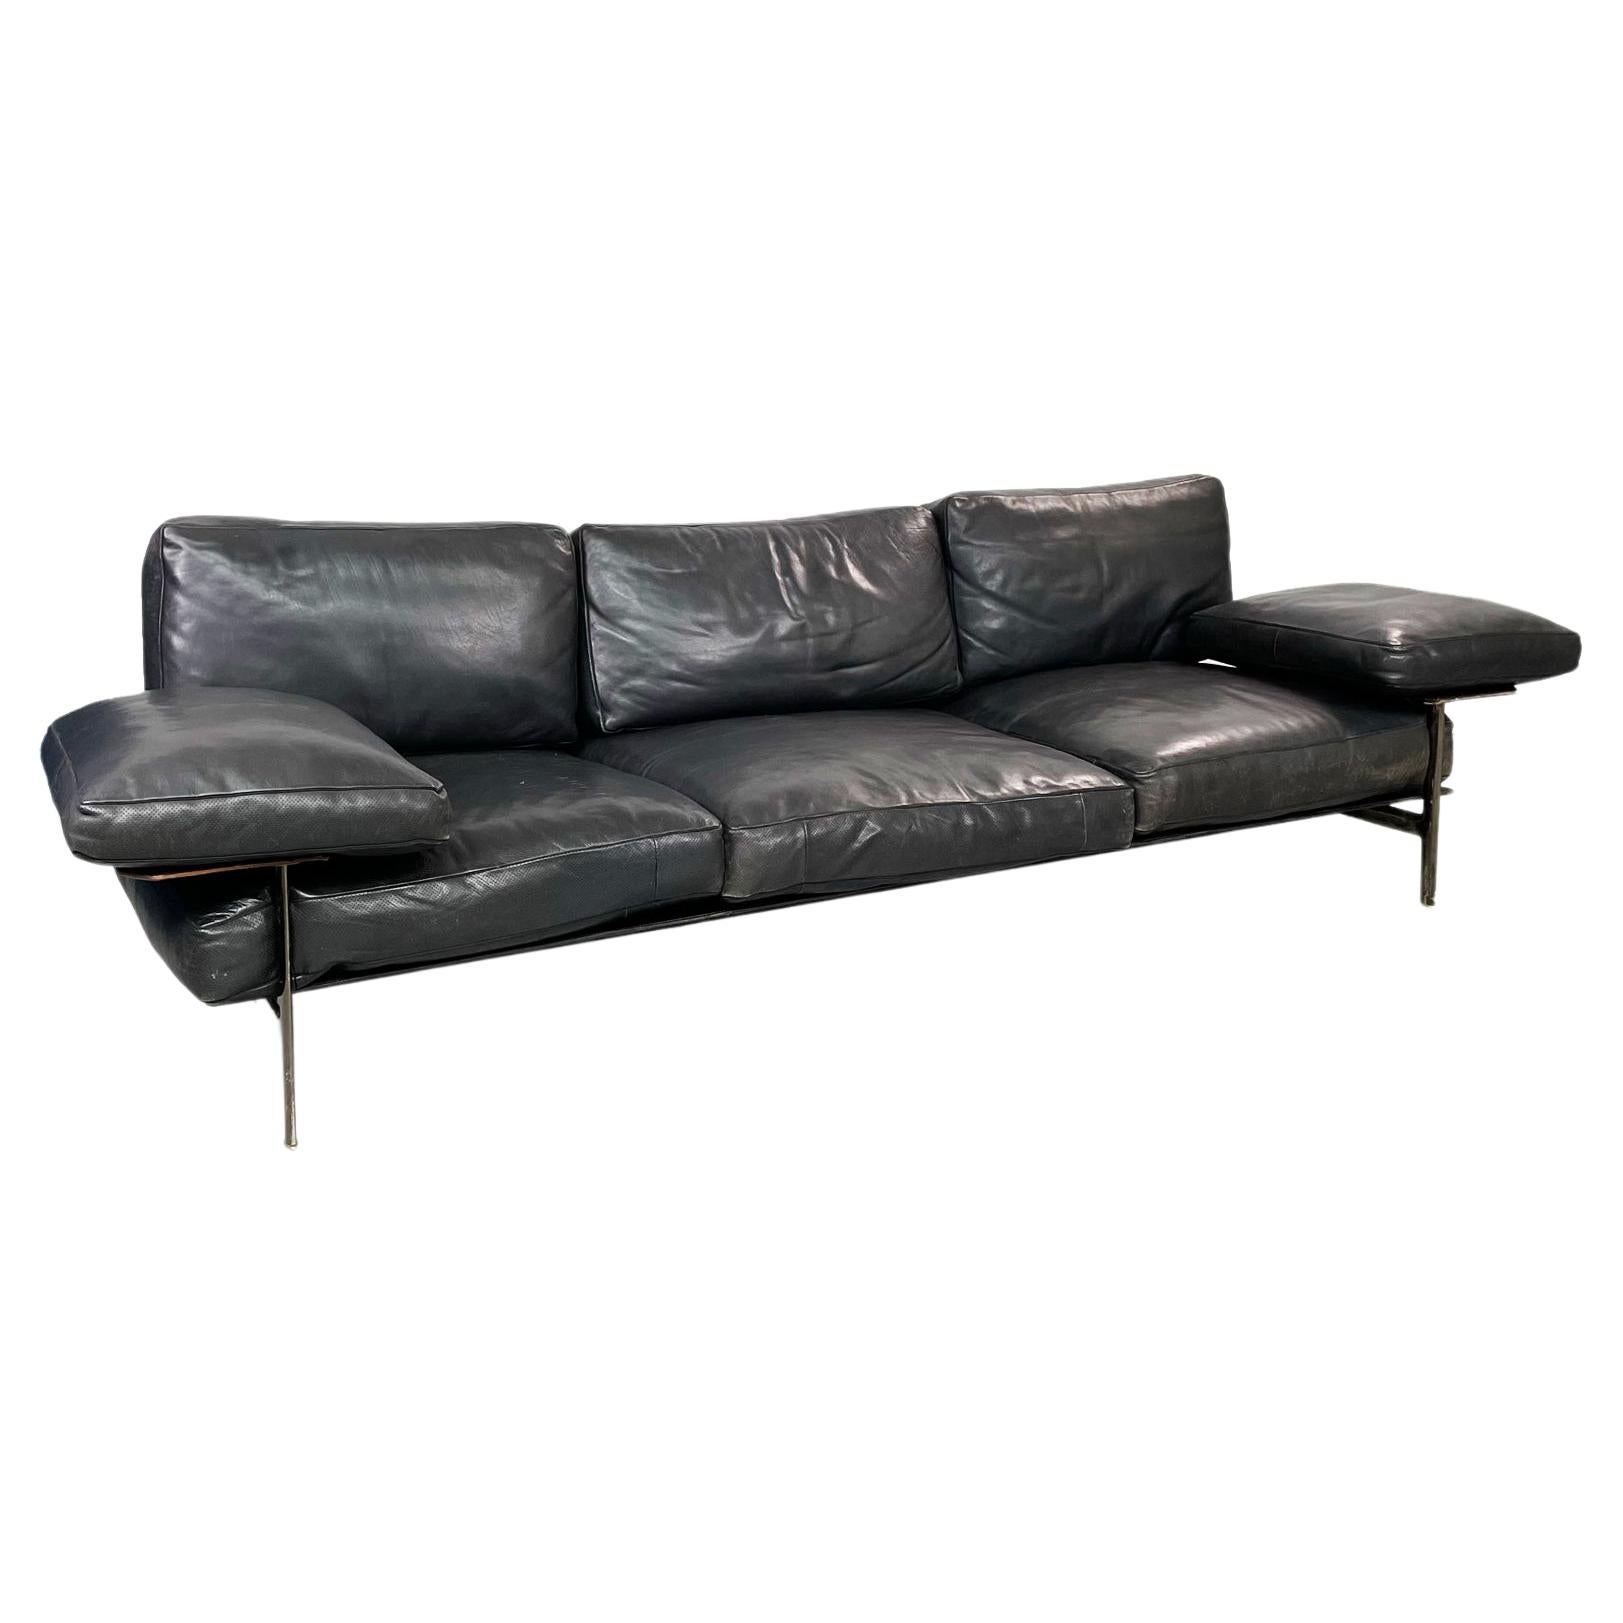 Italian Modern Black Leather Sofa Diesis by Antonio Citterio for B&B, 1980s For Sale